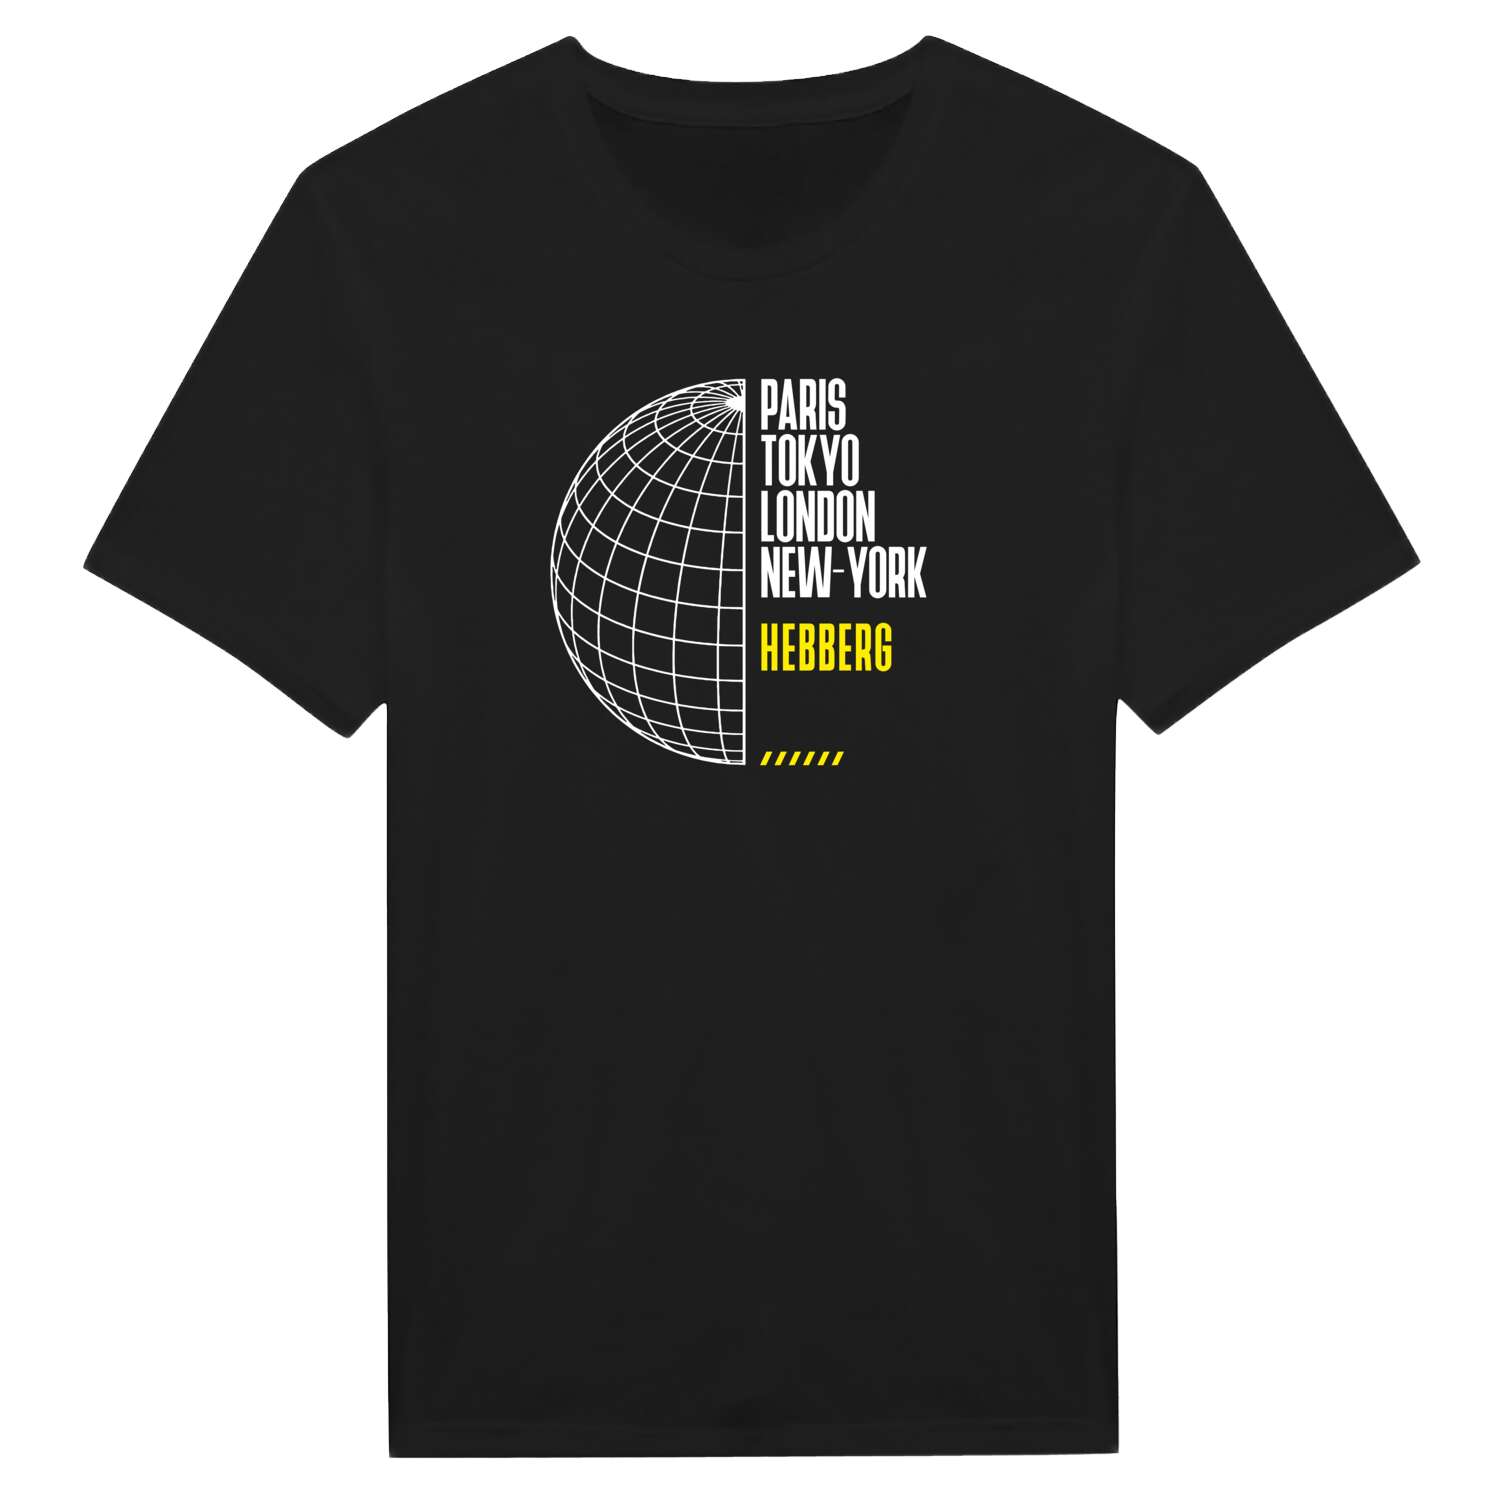 Hebberg T-Shirt »Paris Tokyo London«